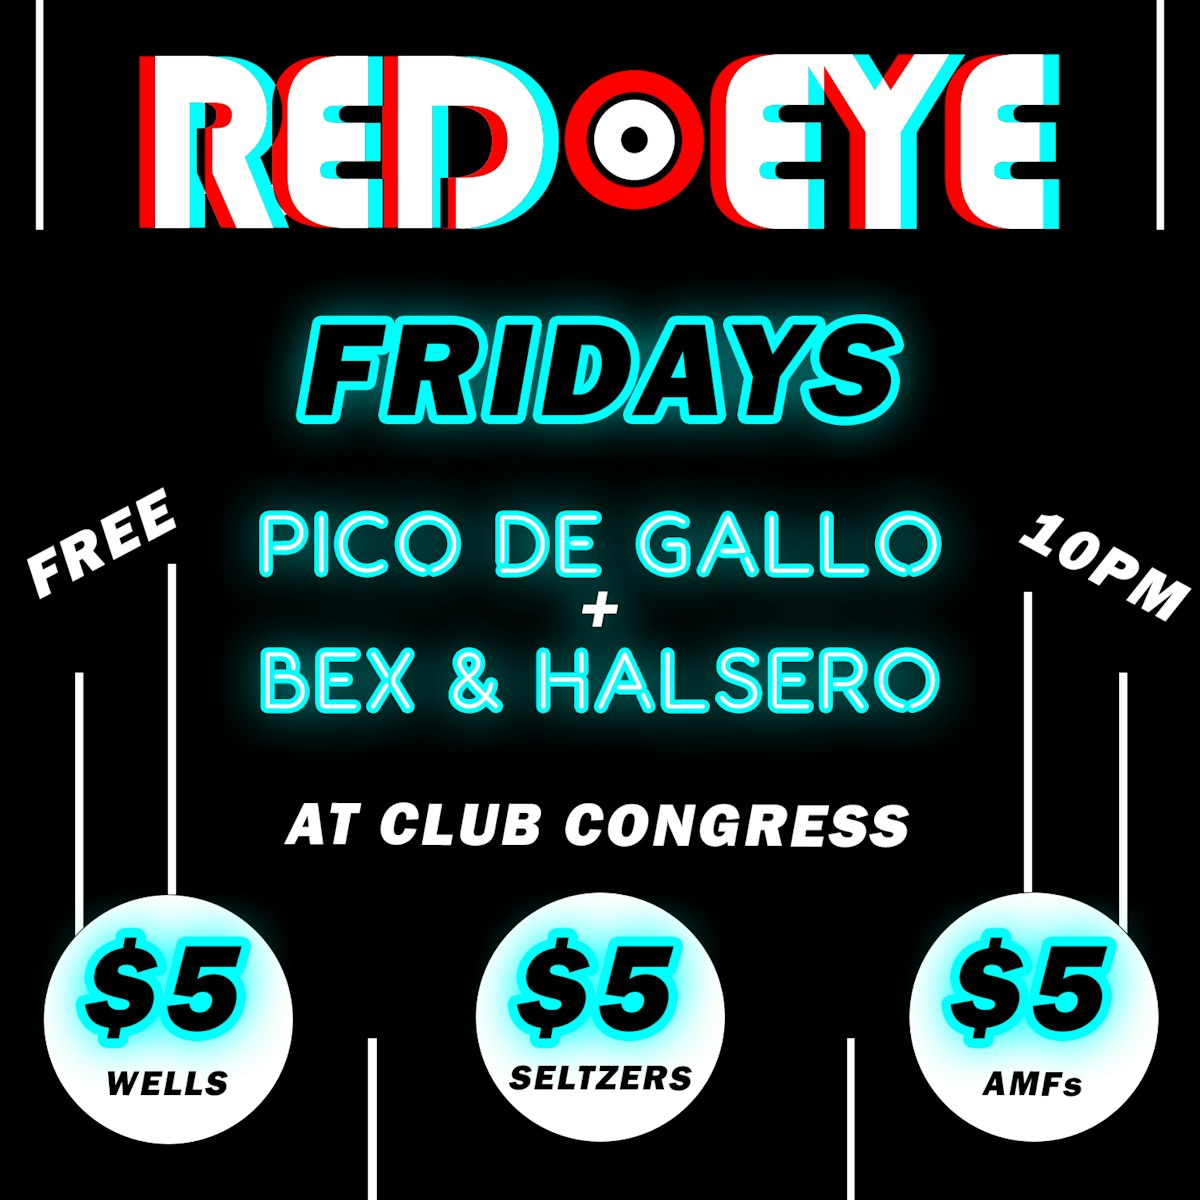 RED EYE at Club Congress (Fridays)